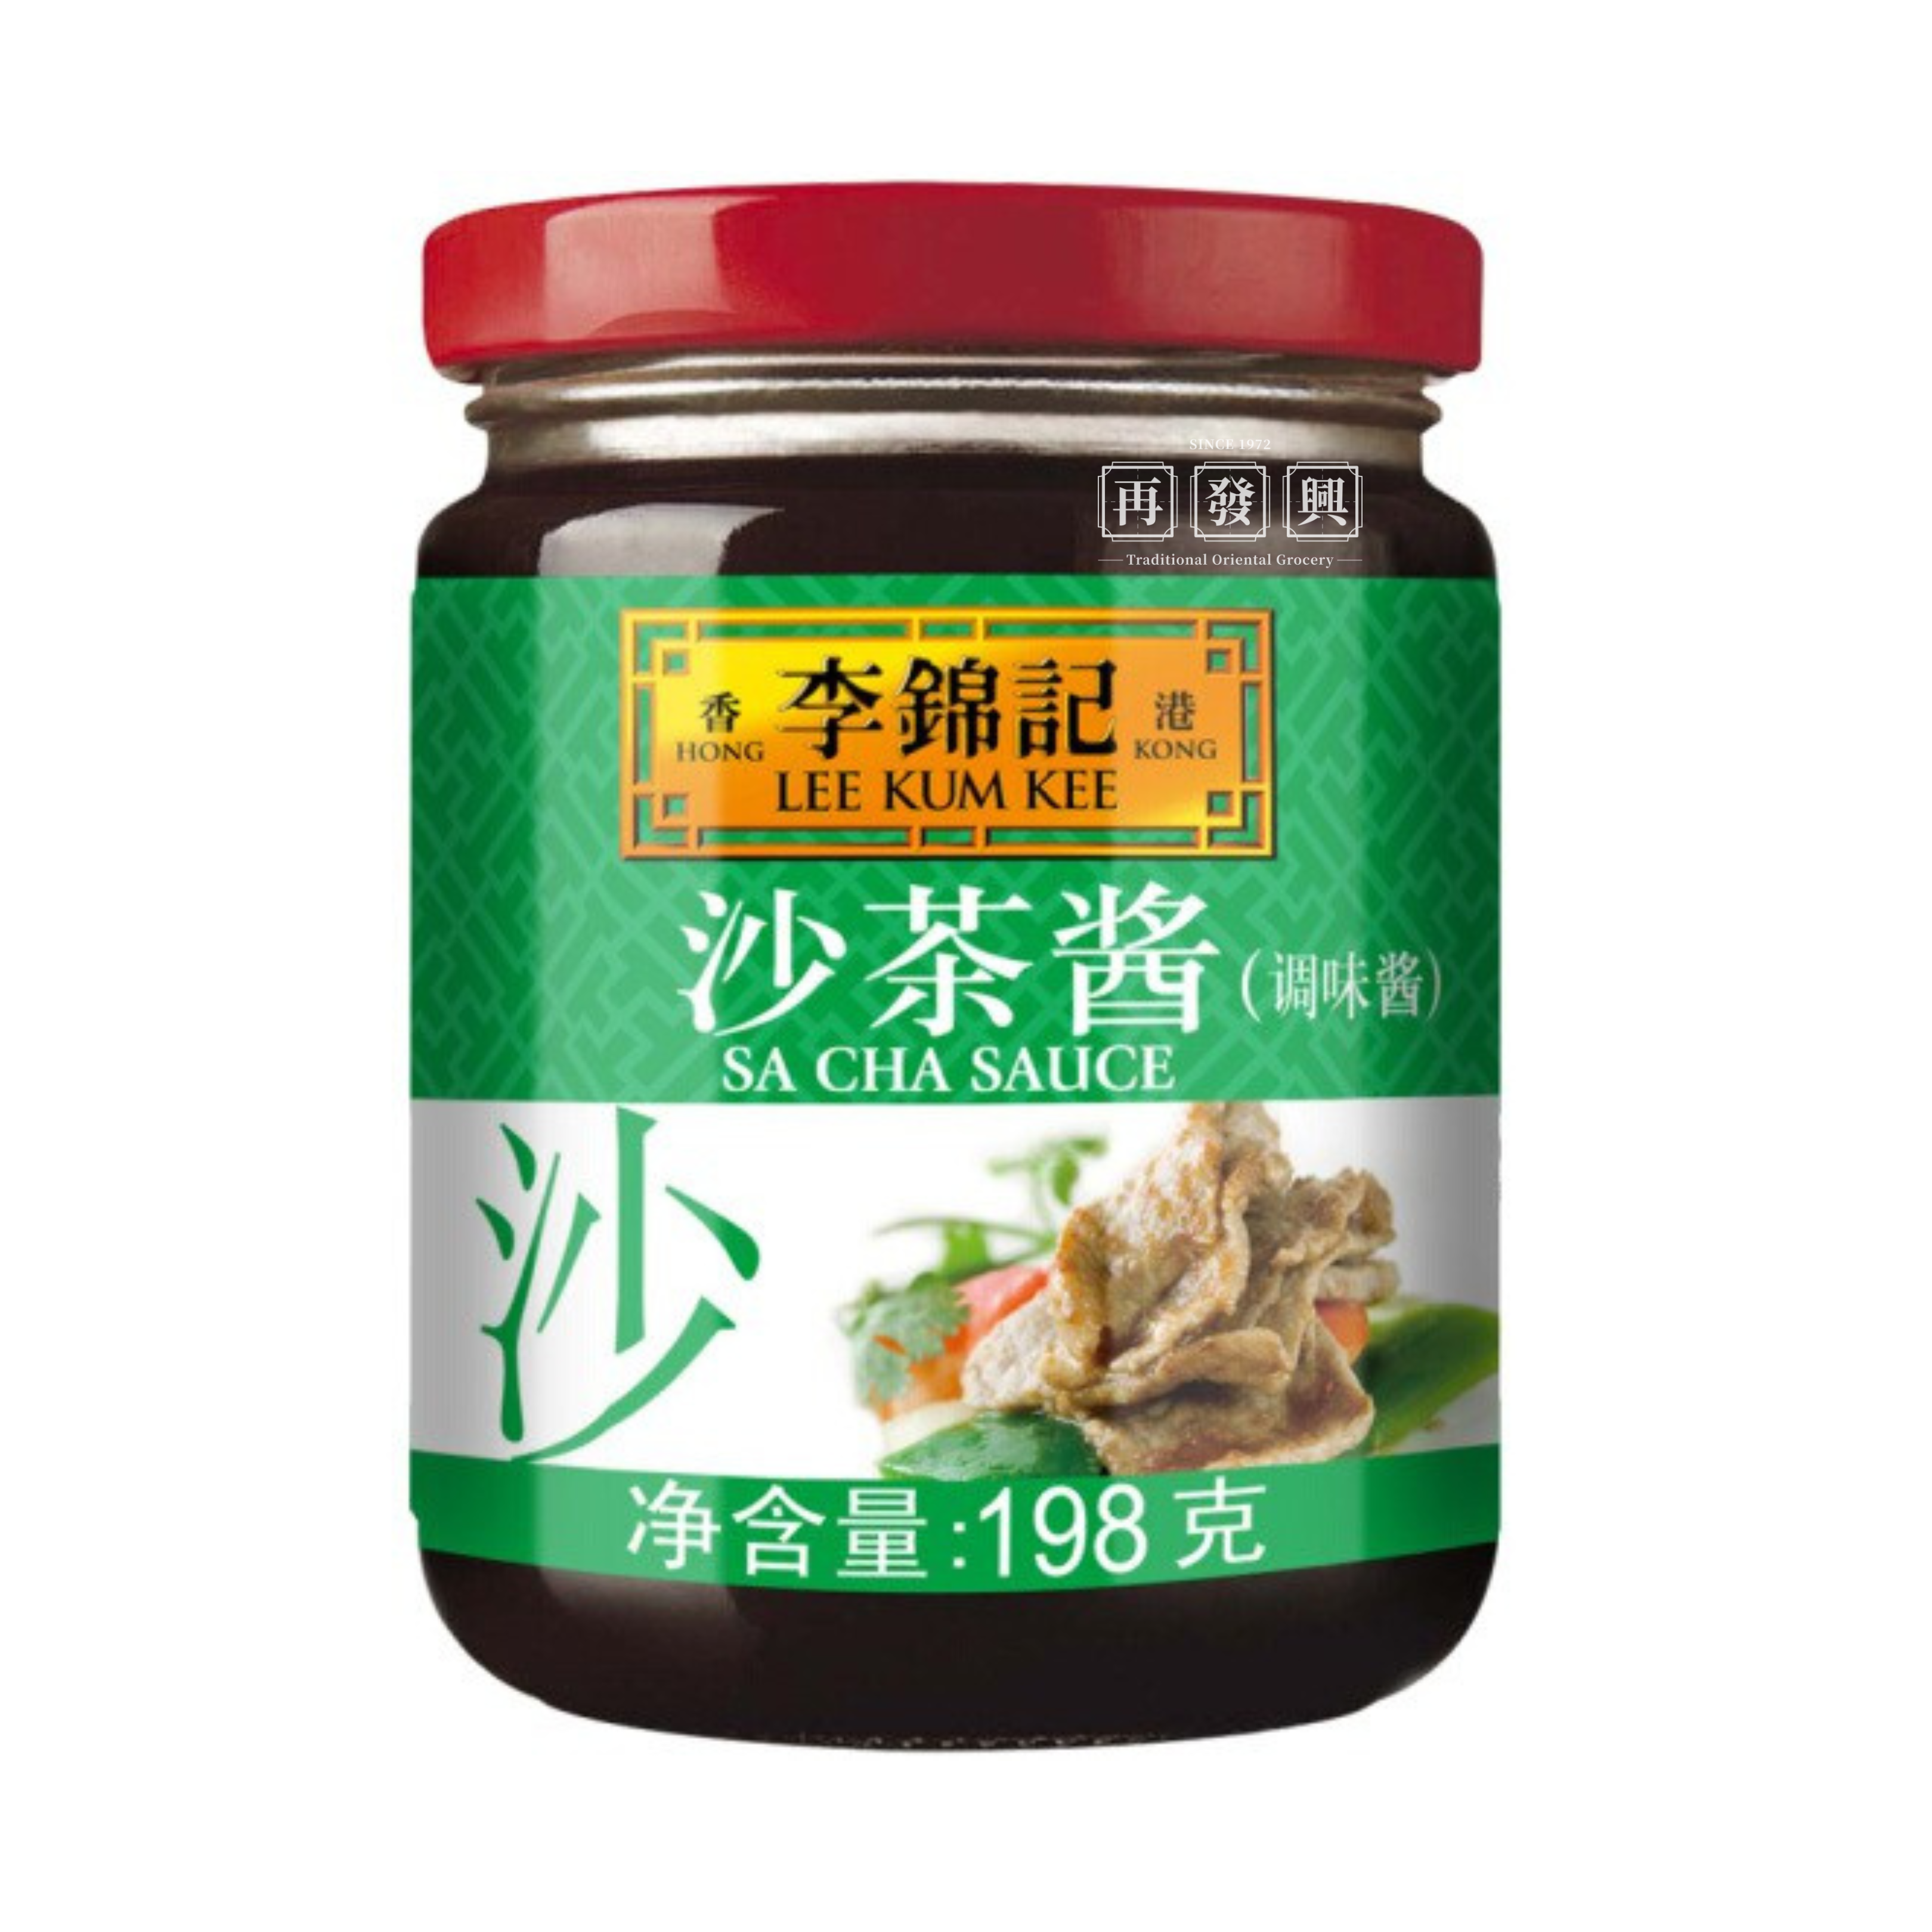 LKK HK Imported Sa Cha Sauce 李锦记香港进口沙茶酱 198g